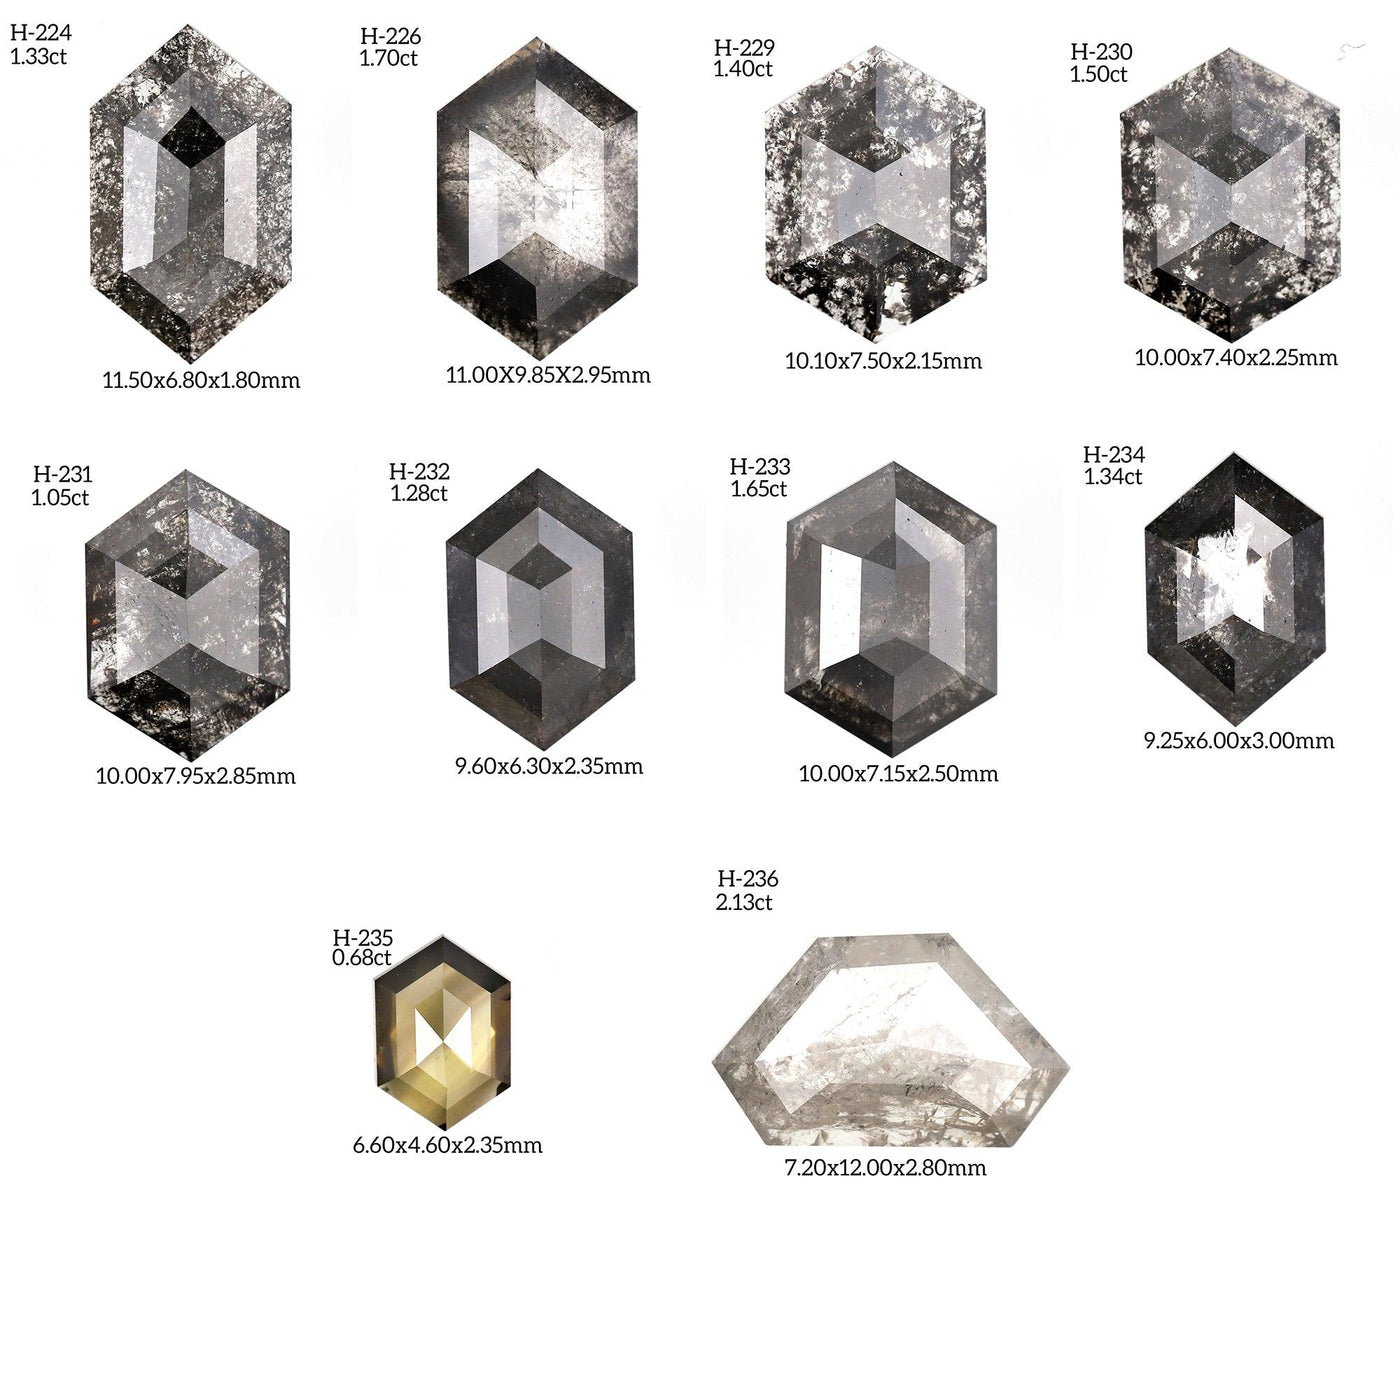 H216 - Salt and pepper hexagon diamond - Rubysta